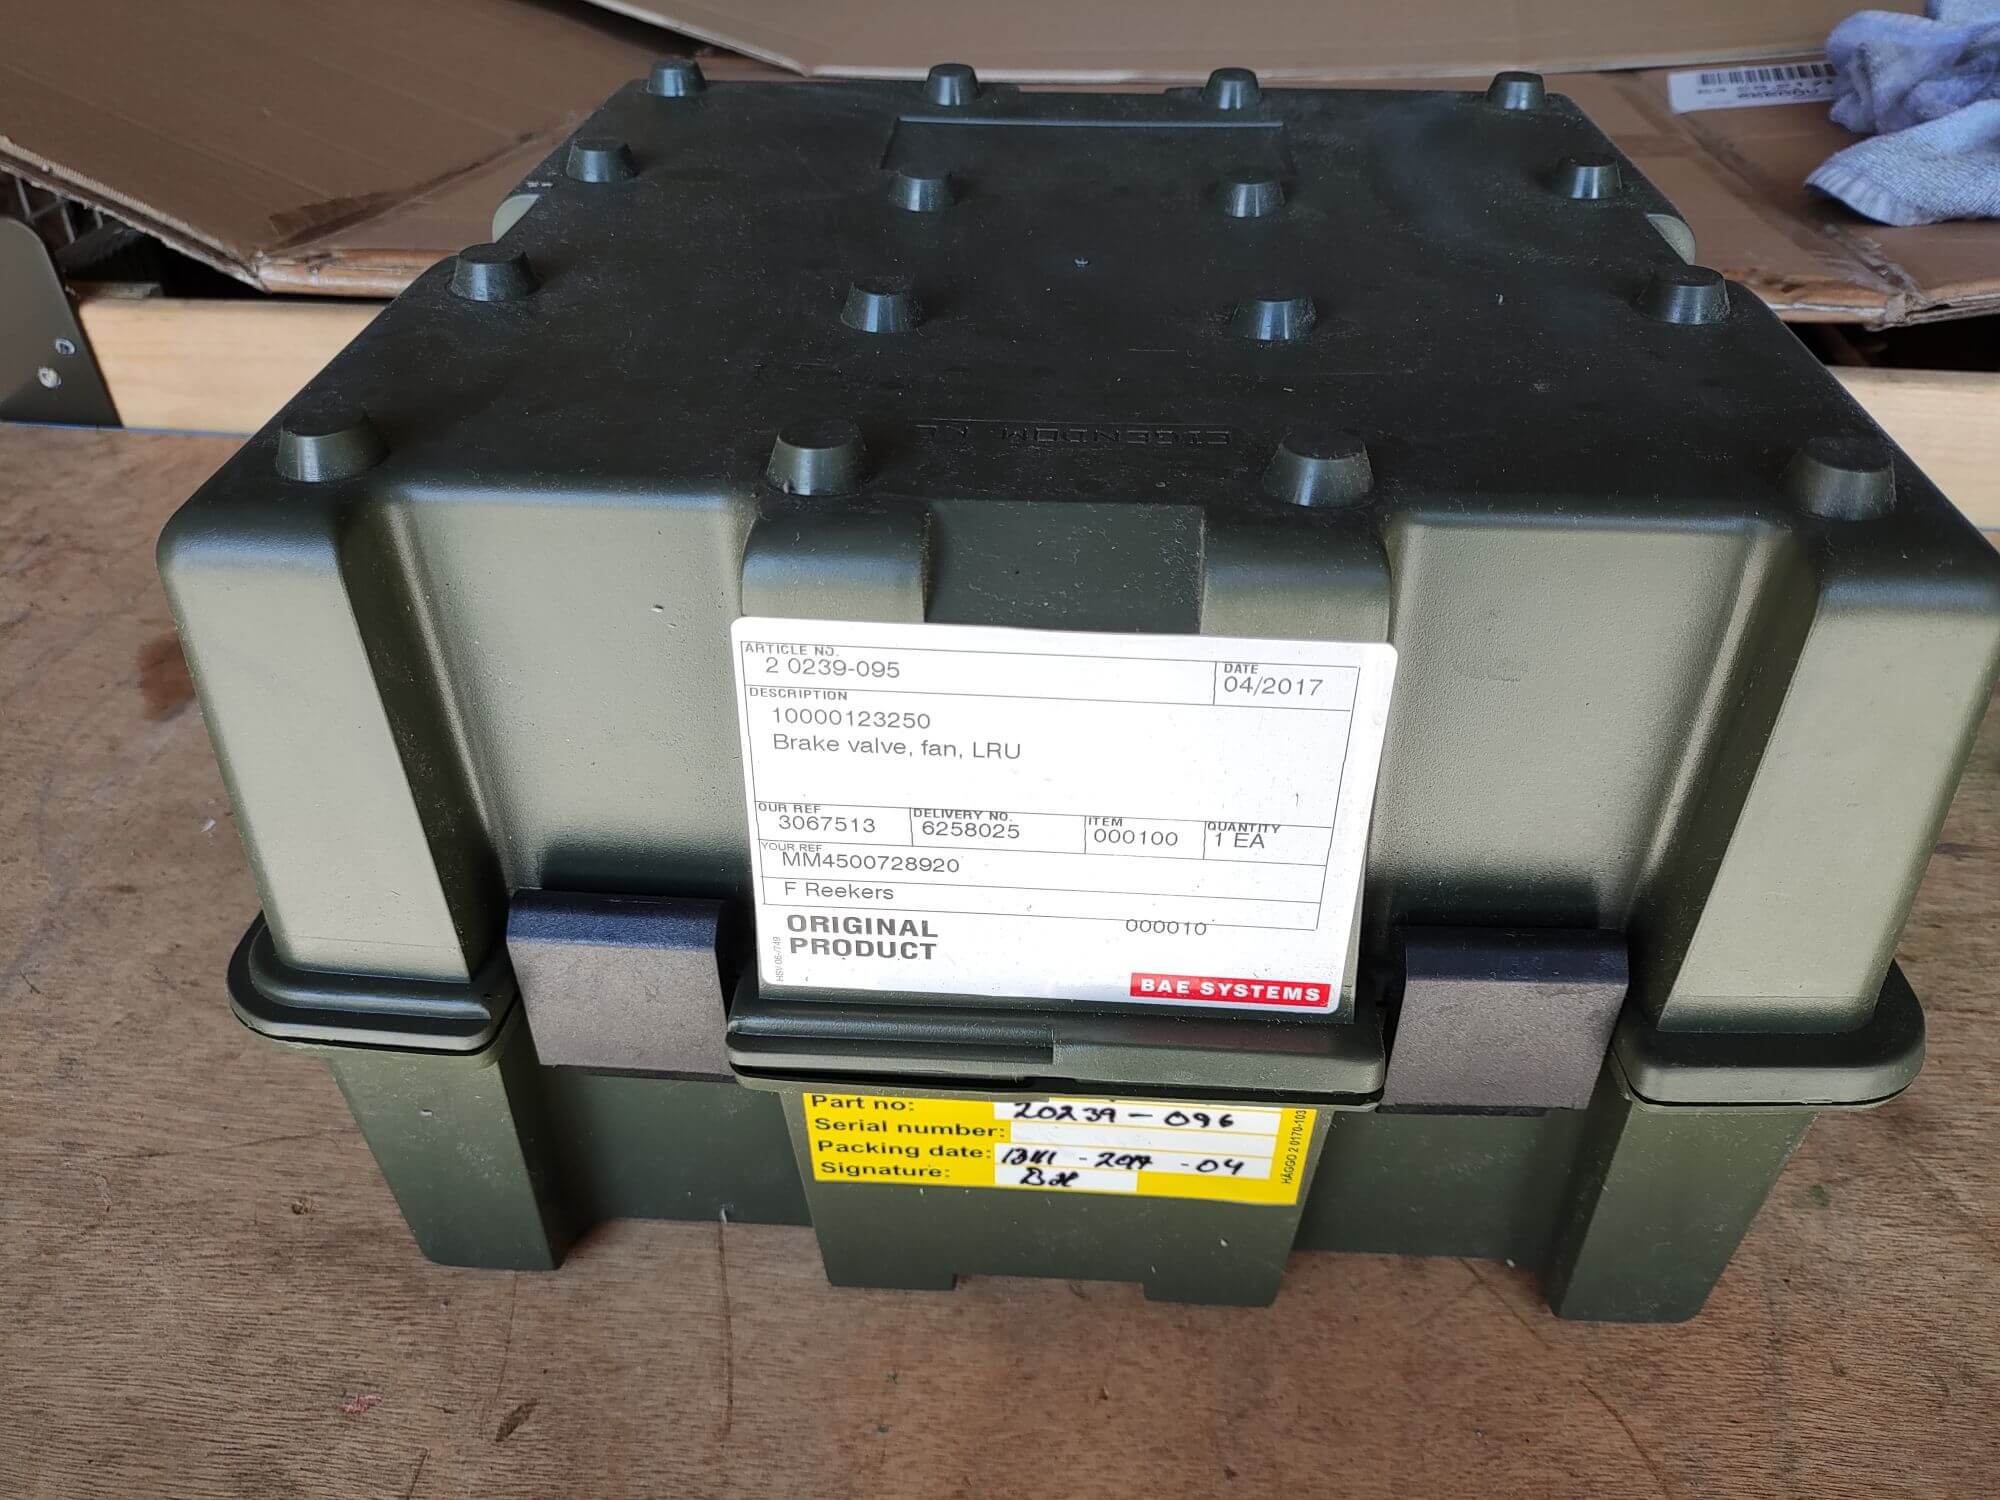 Militär Kiste Transport Box Kunststoff stapelbar 31x31x21cm